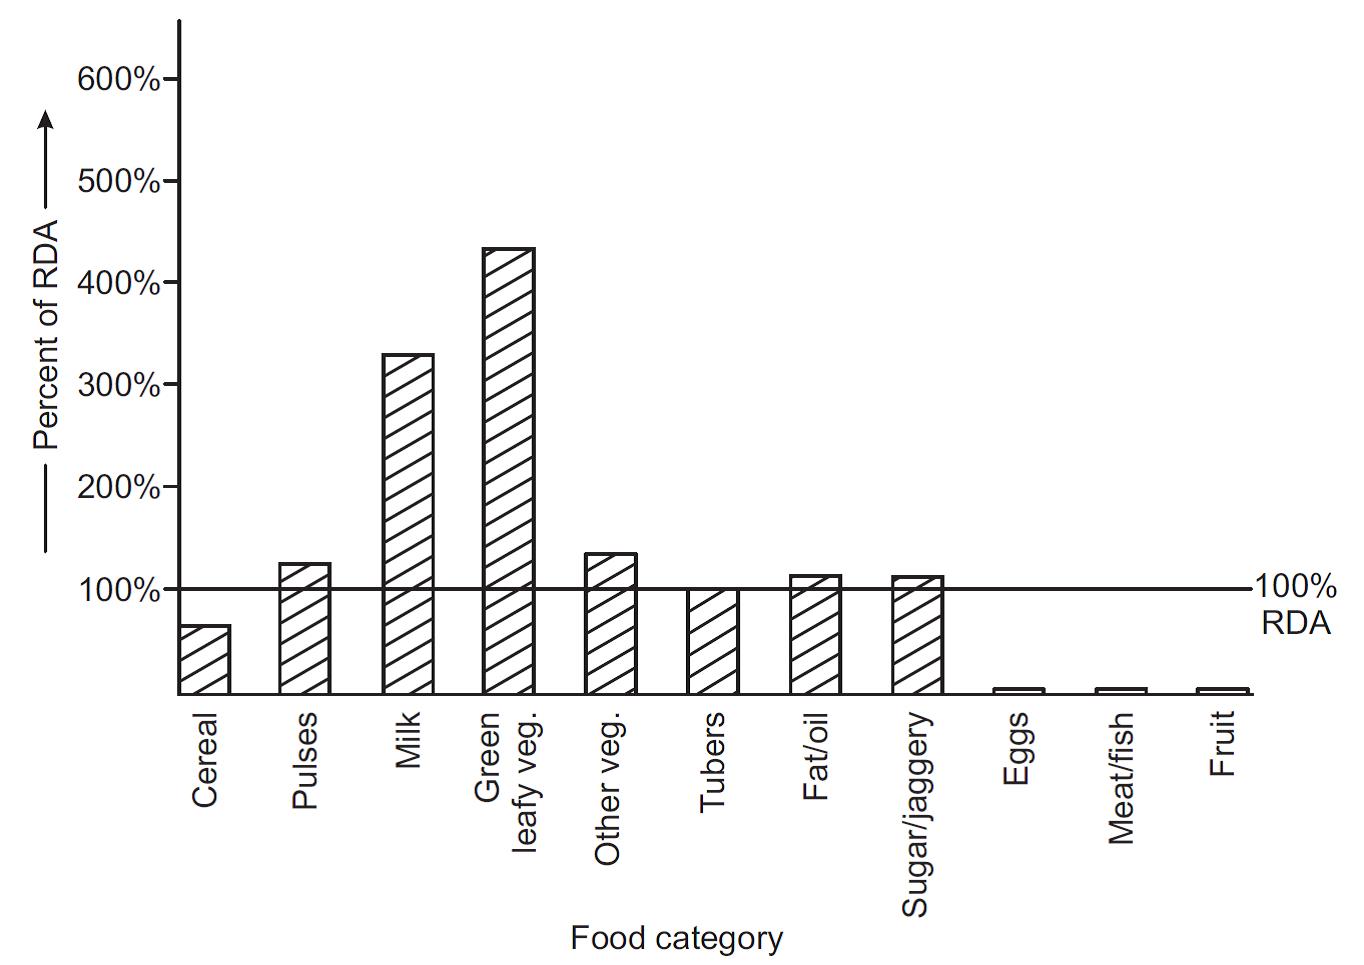 Figure showing Food category intake per CU as percent of RDA